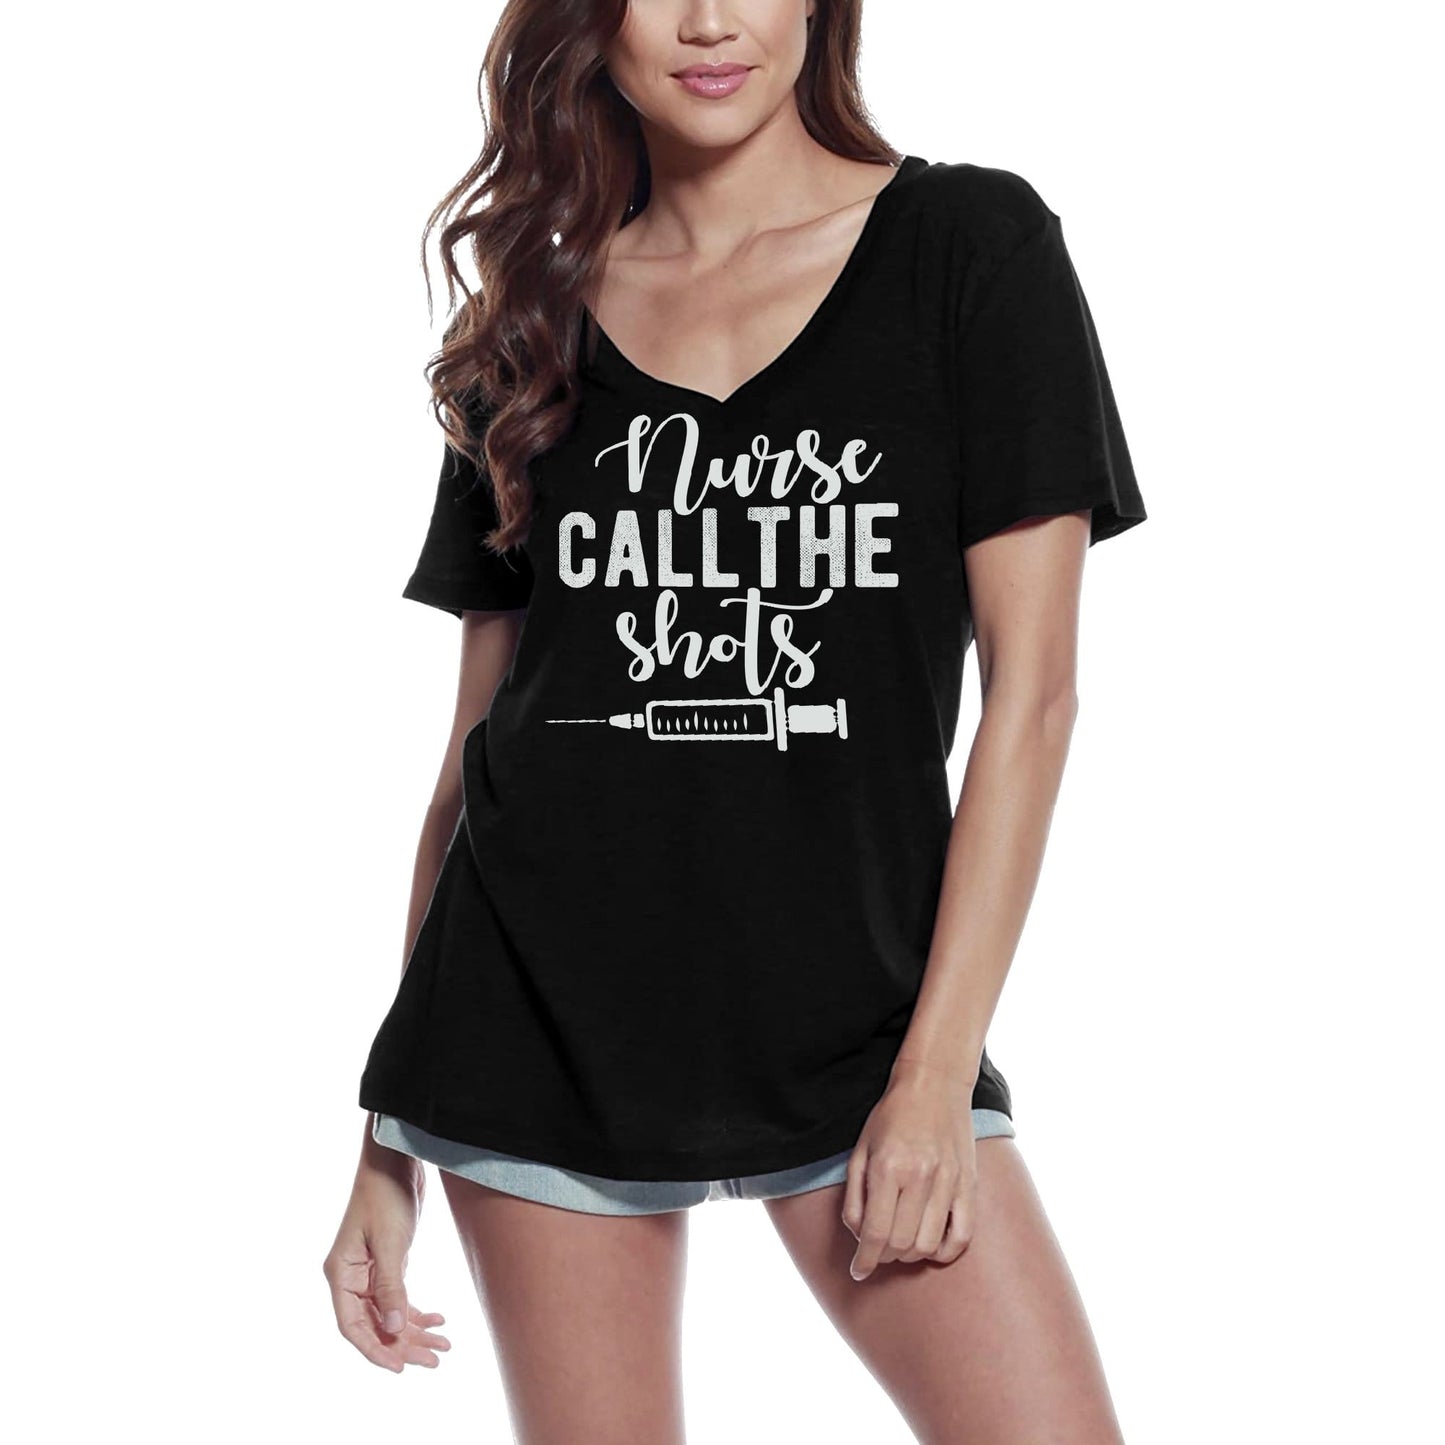 ULTRABASIC Women's T-Shirt Nurse Call the Shots - Funny Humor Tee Shirt Gift Tops